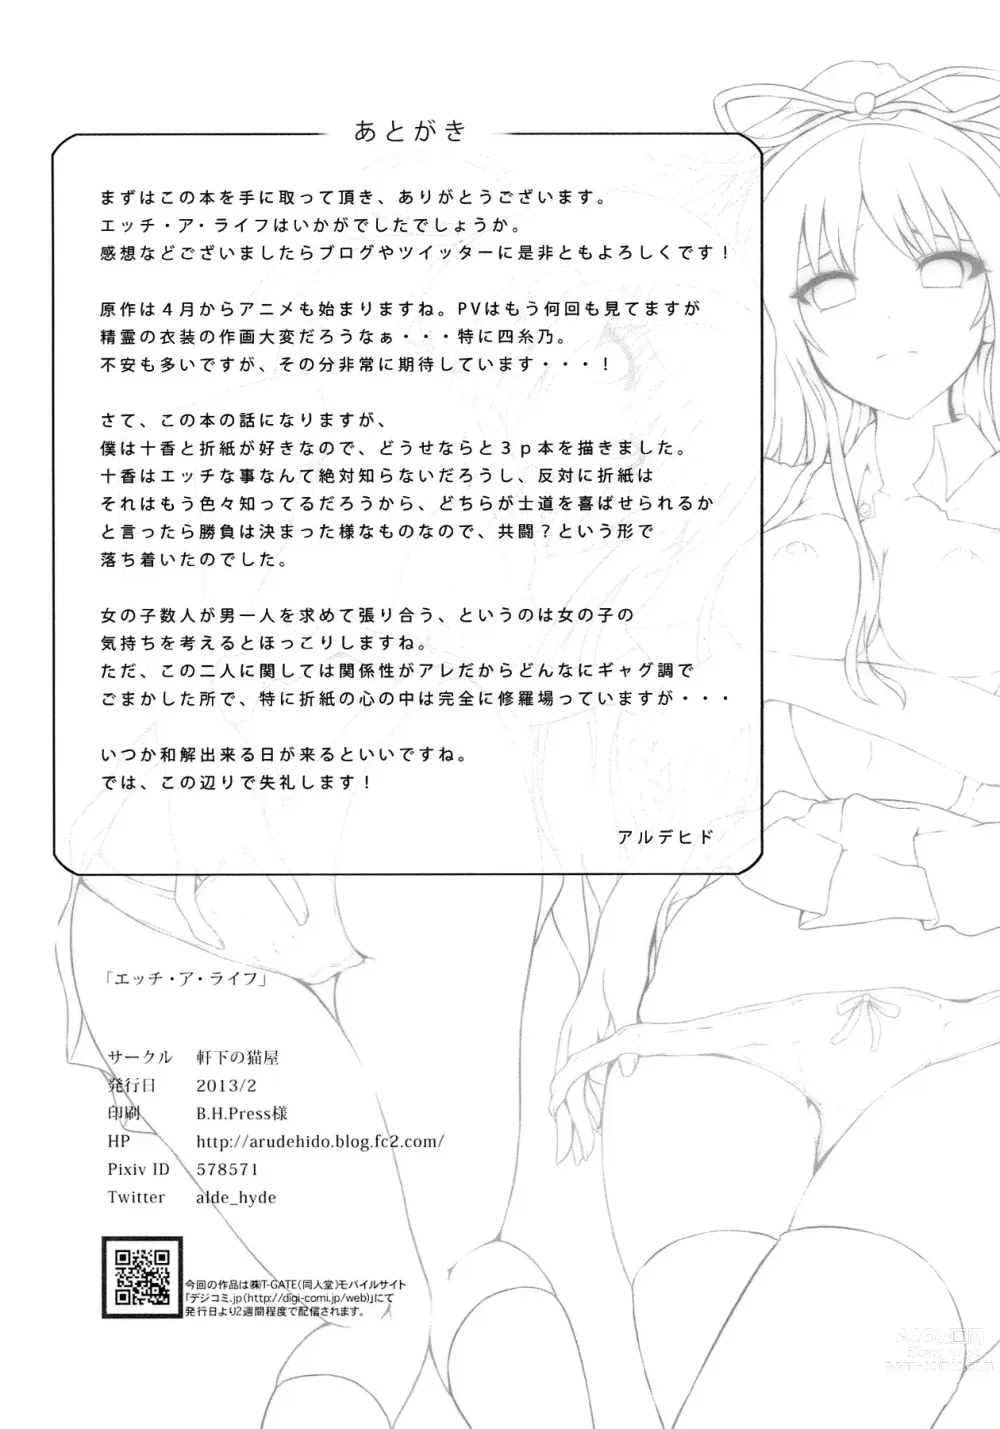 Page 26 of doujinshi H A LIFE